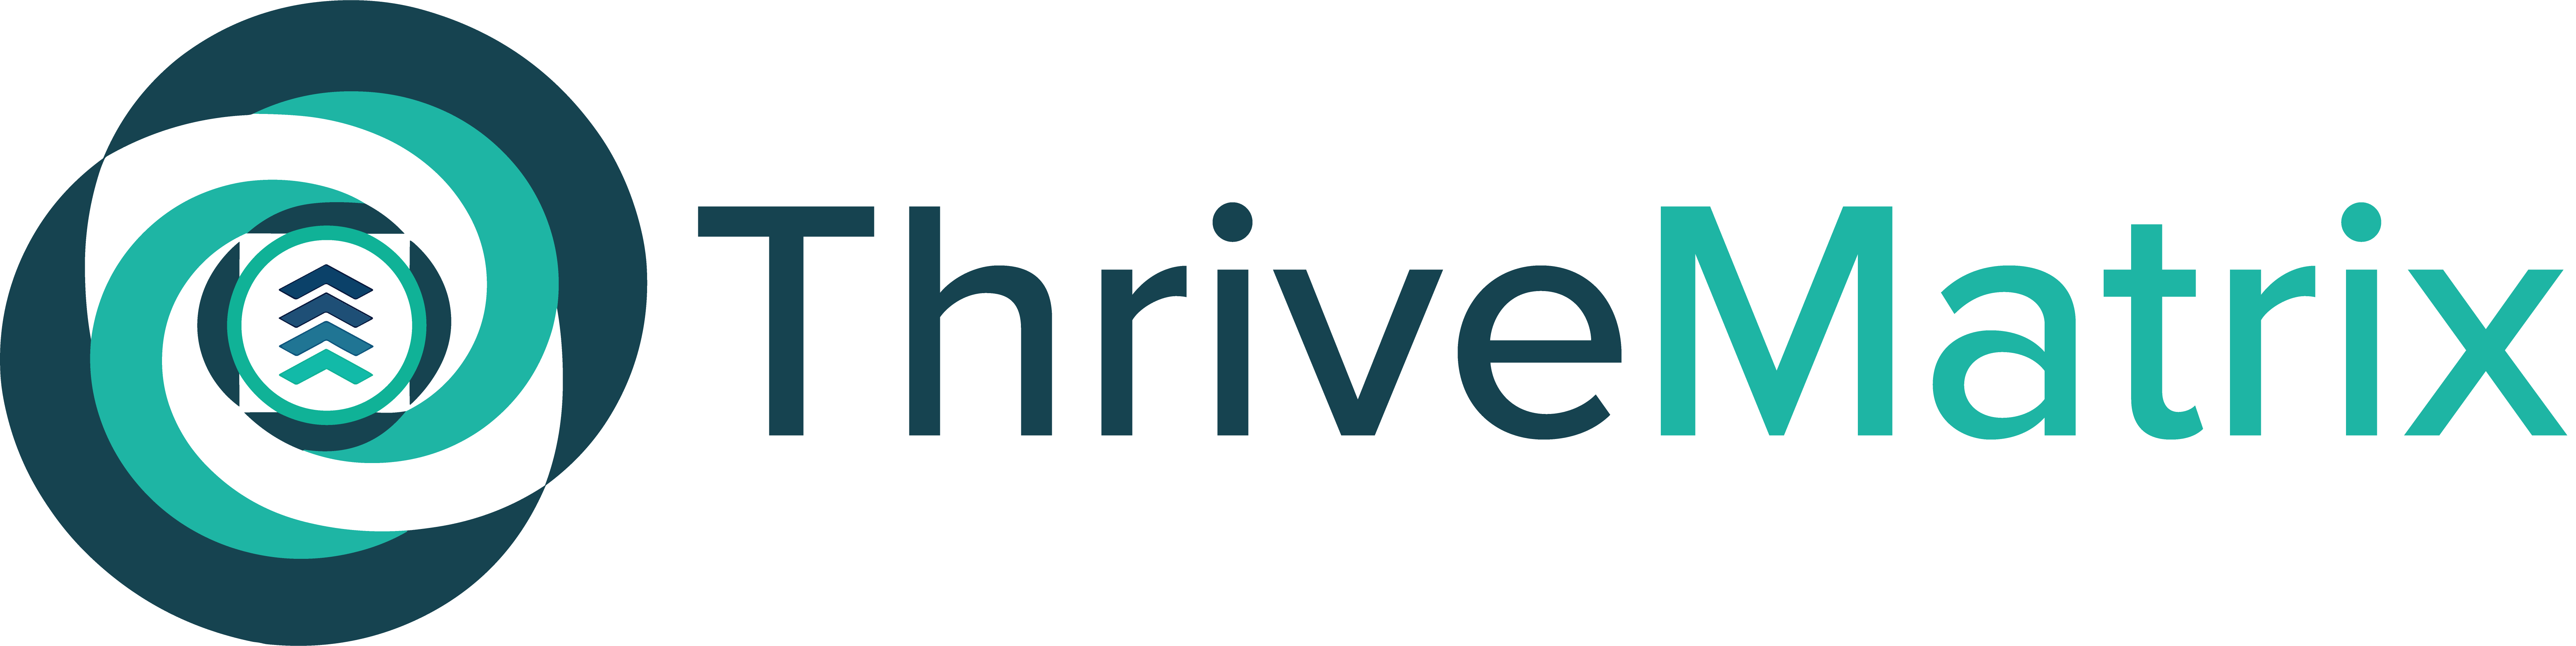 Thrive Matrix Marketing Logo